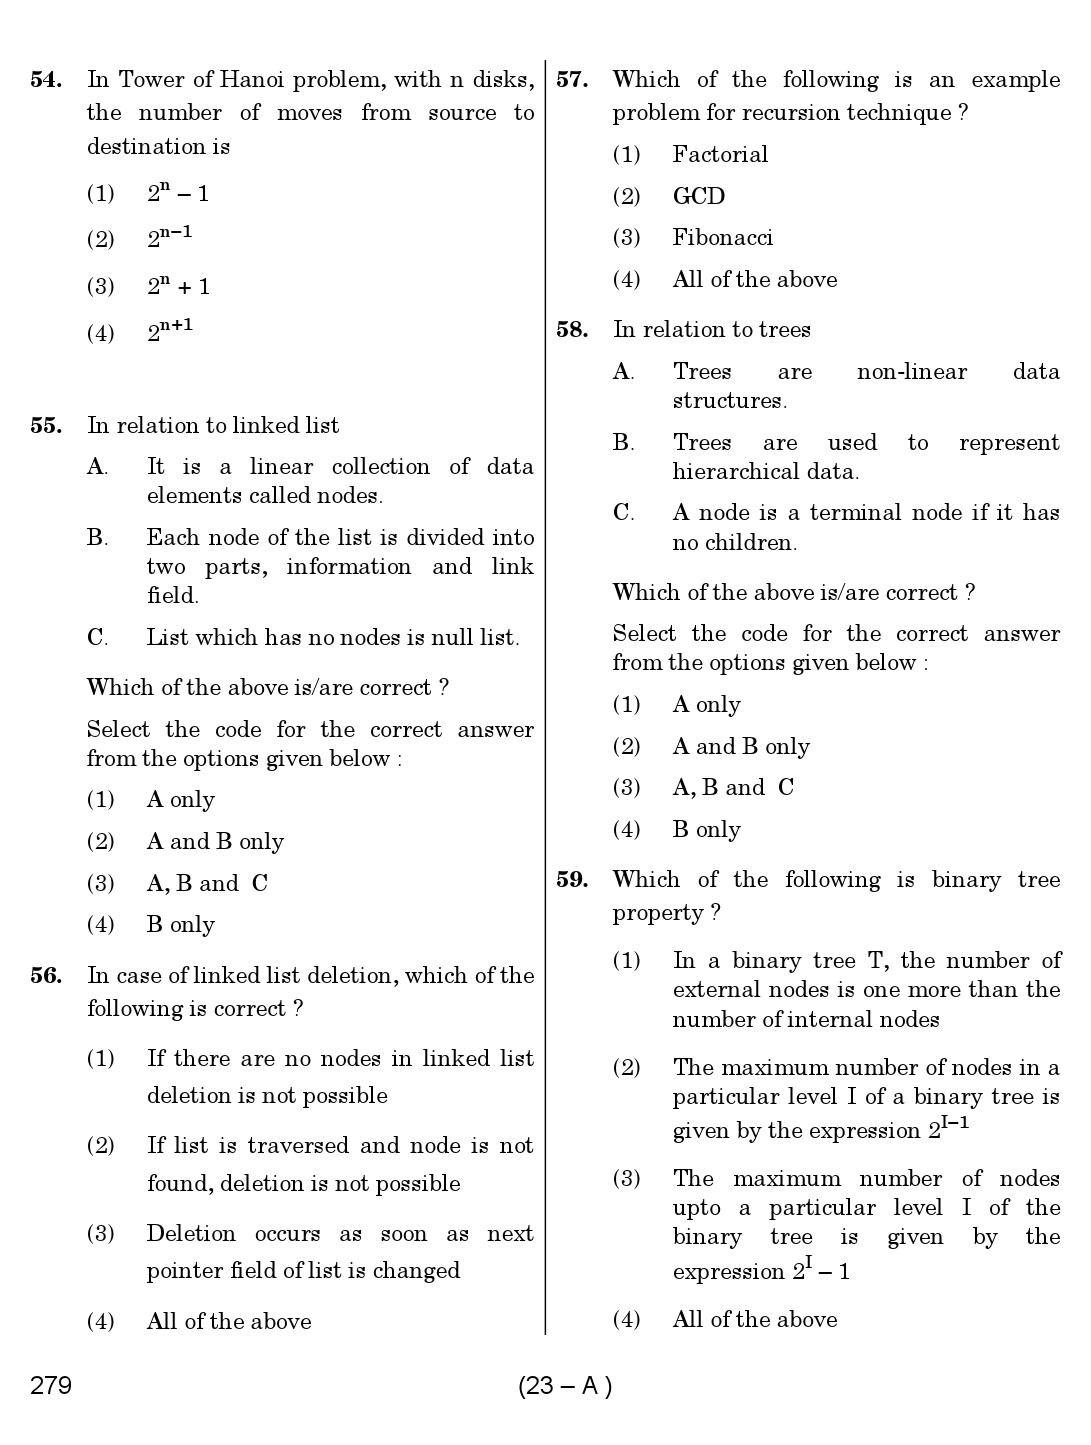 Karnataka PSC Computer Science Teachers Exam Sample Question Paper Subject code 279 23